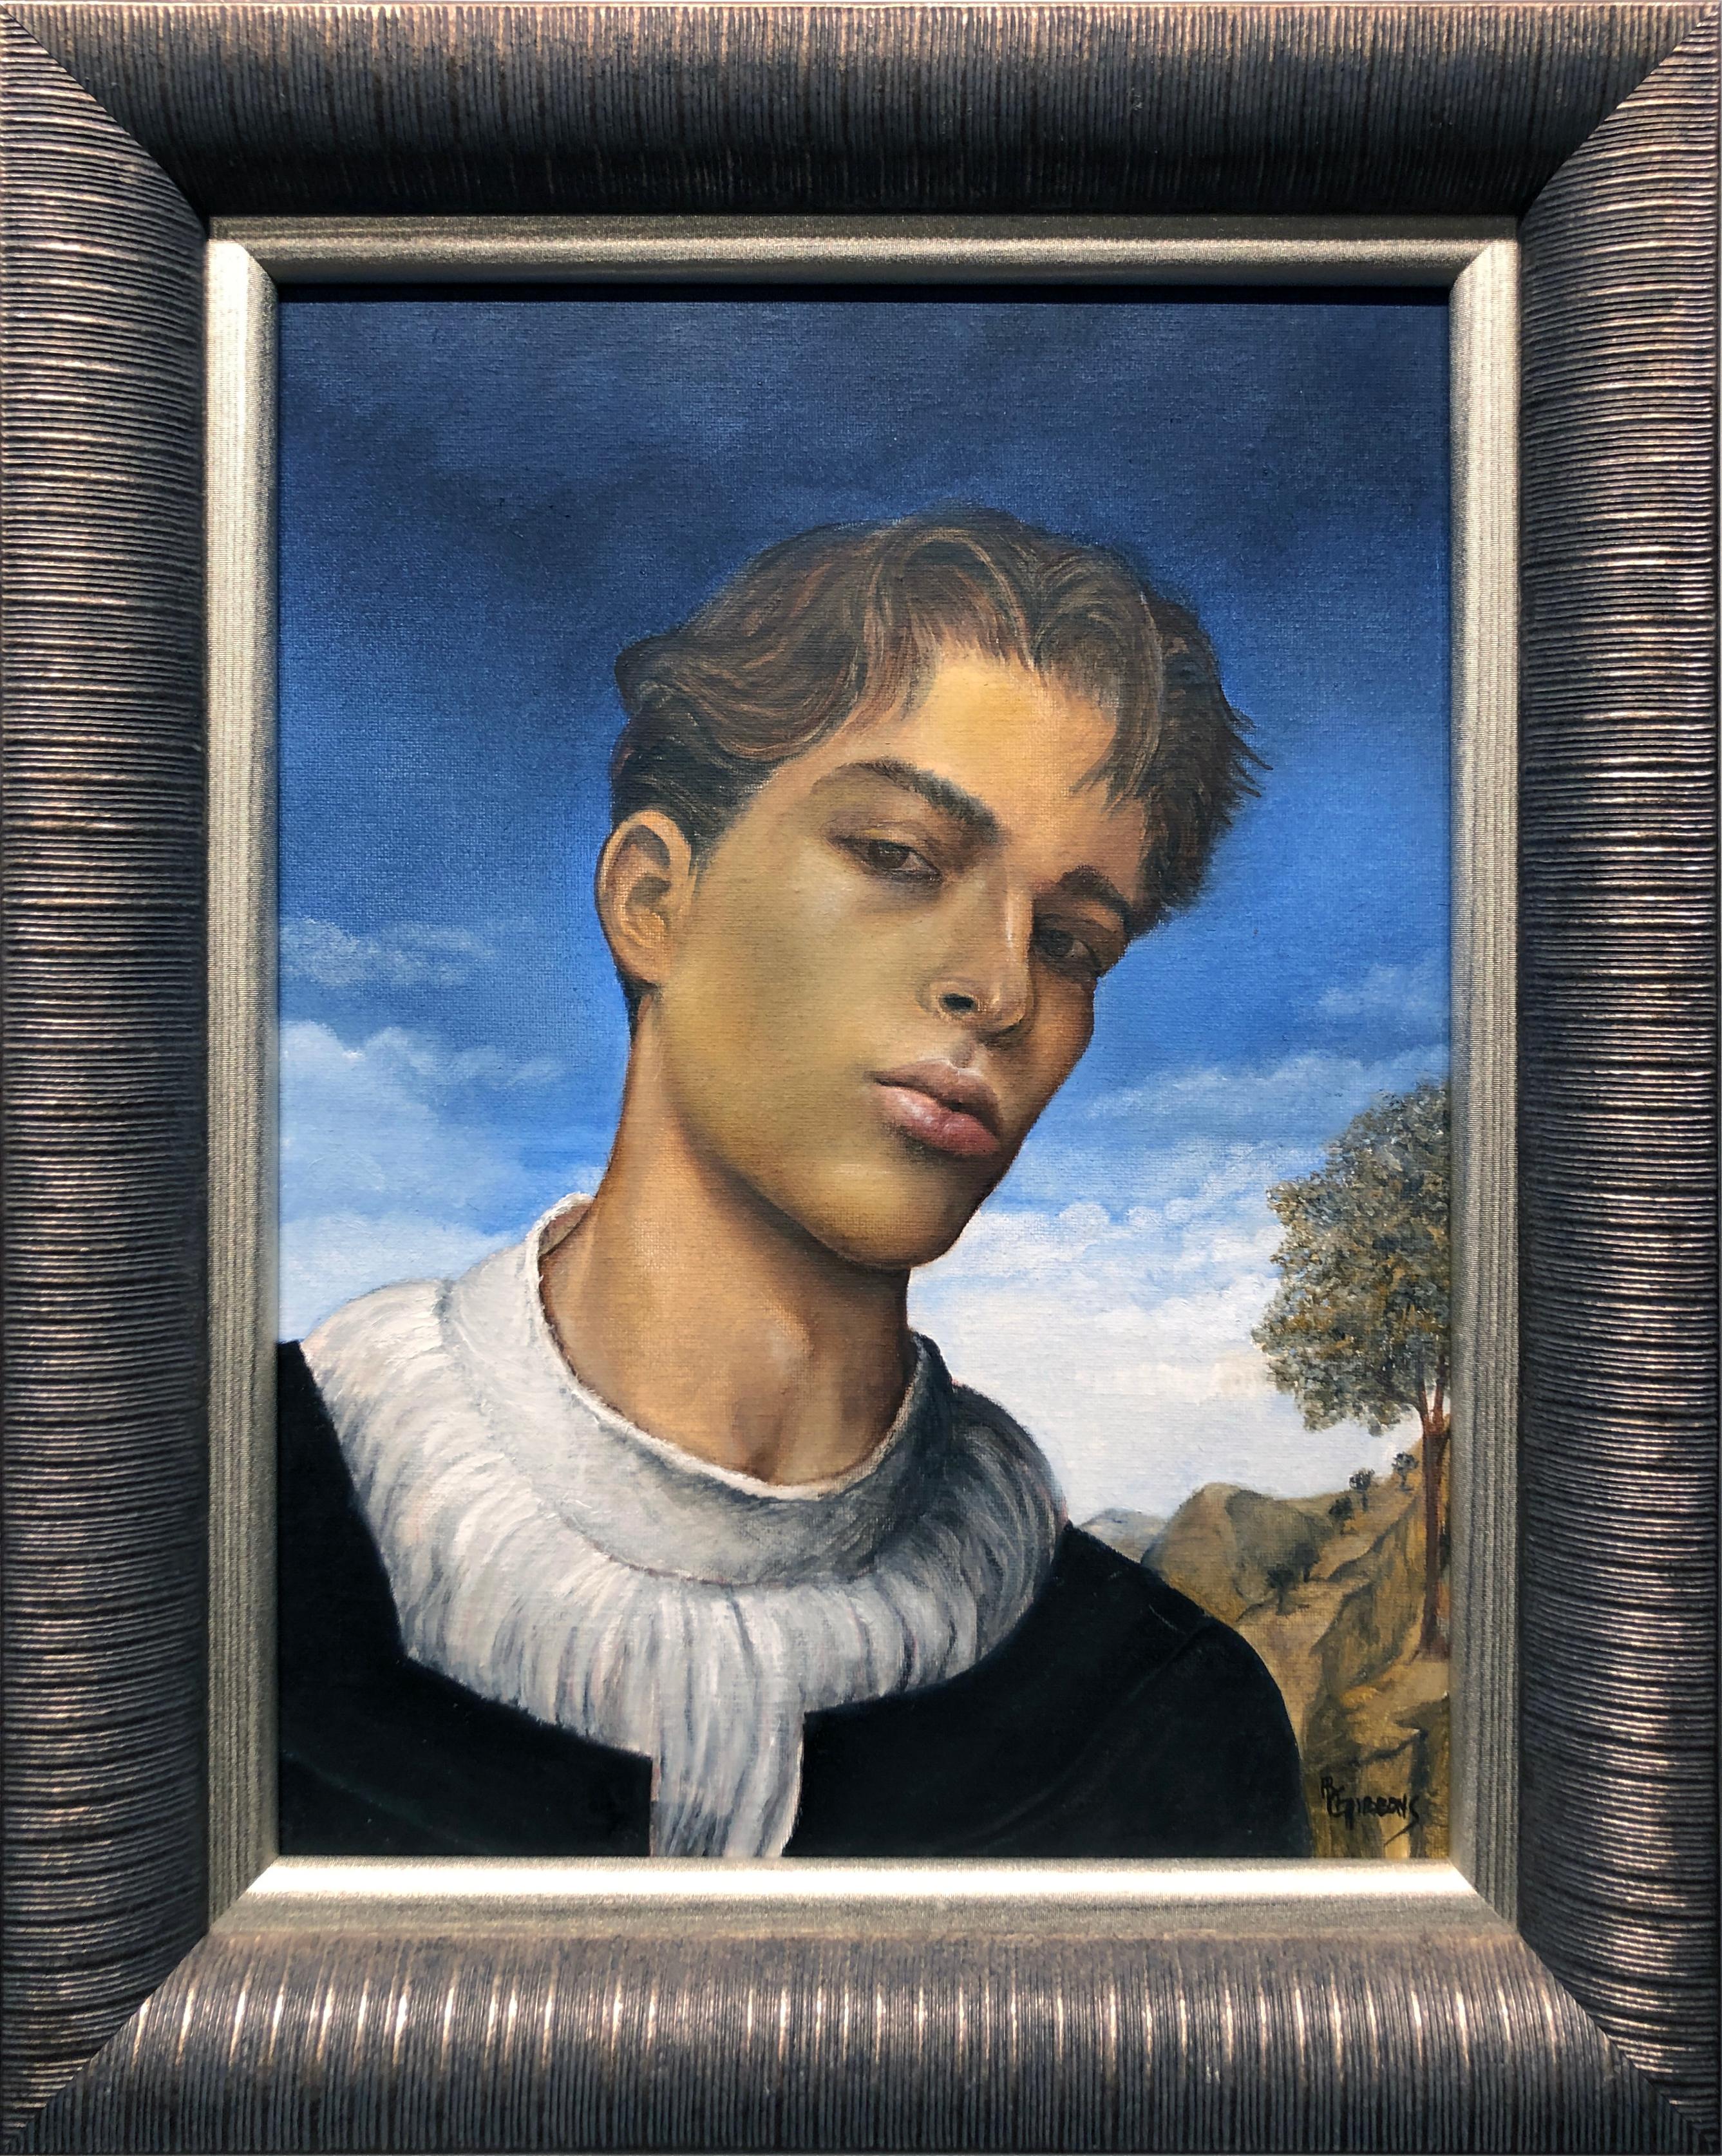 Youth, Portrait of Young Male, Renaissance Style Portraiture, Original Oil